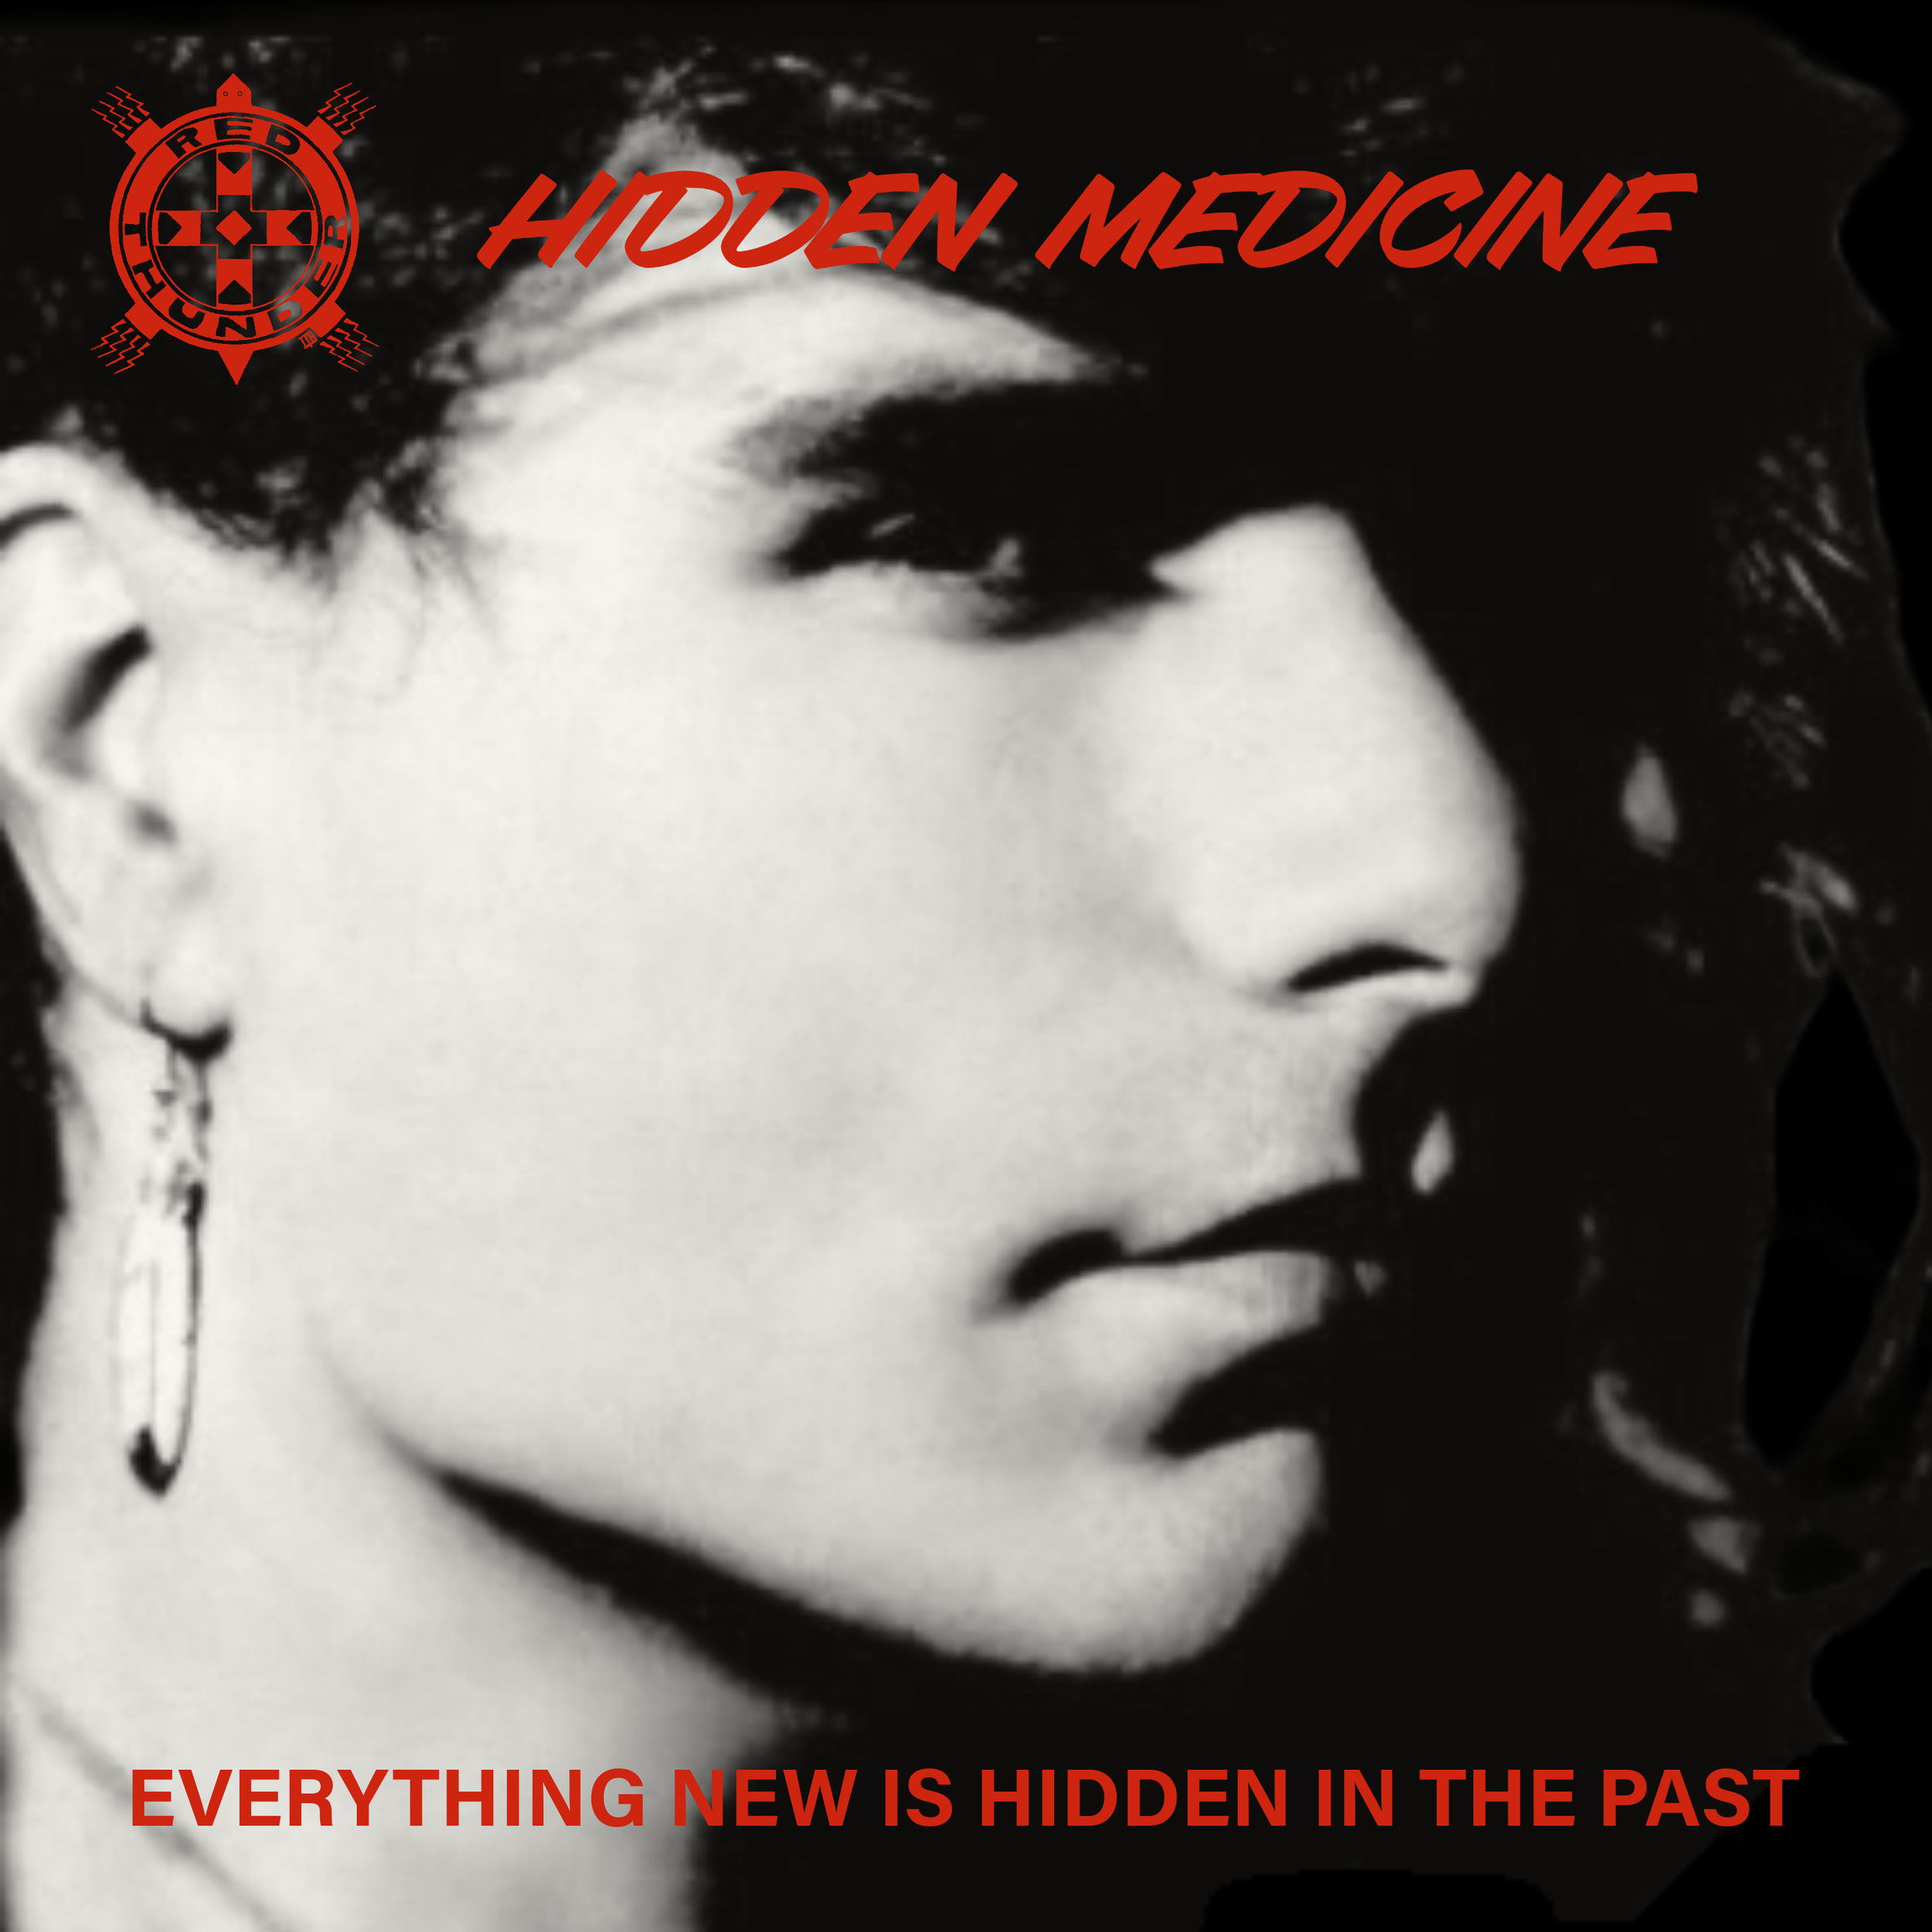 Album Covers-3-Hidden Medicine.png